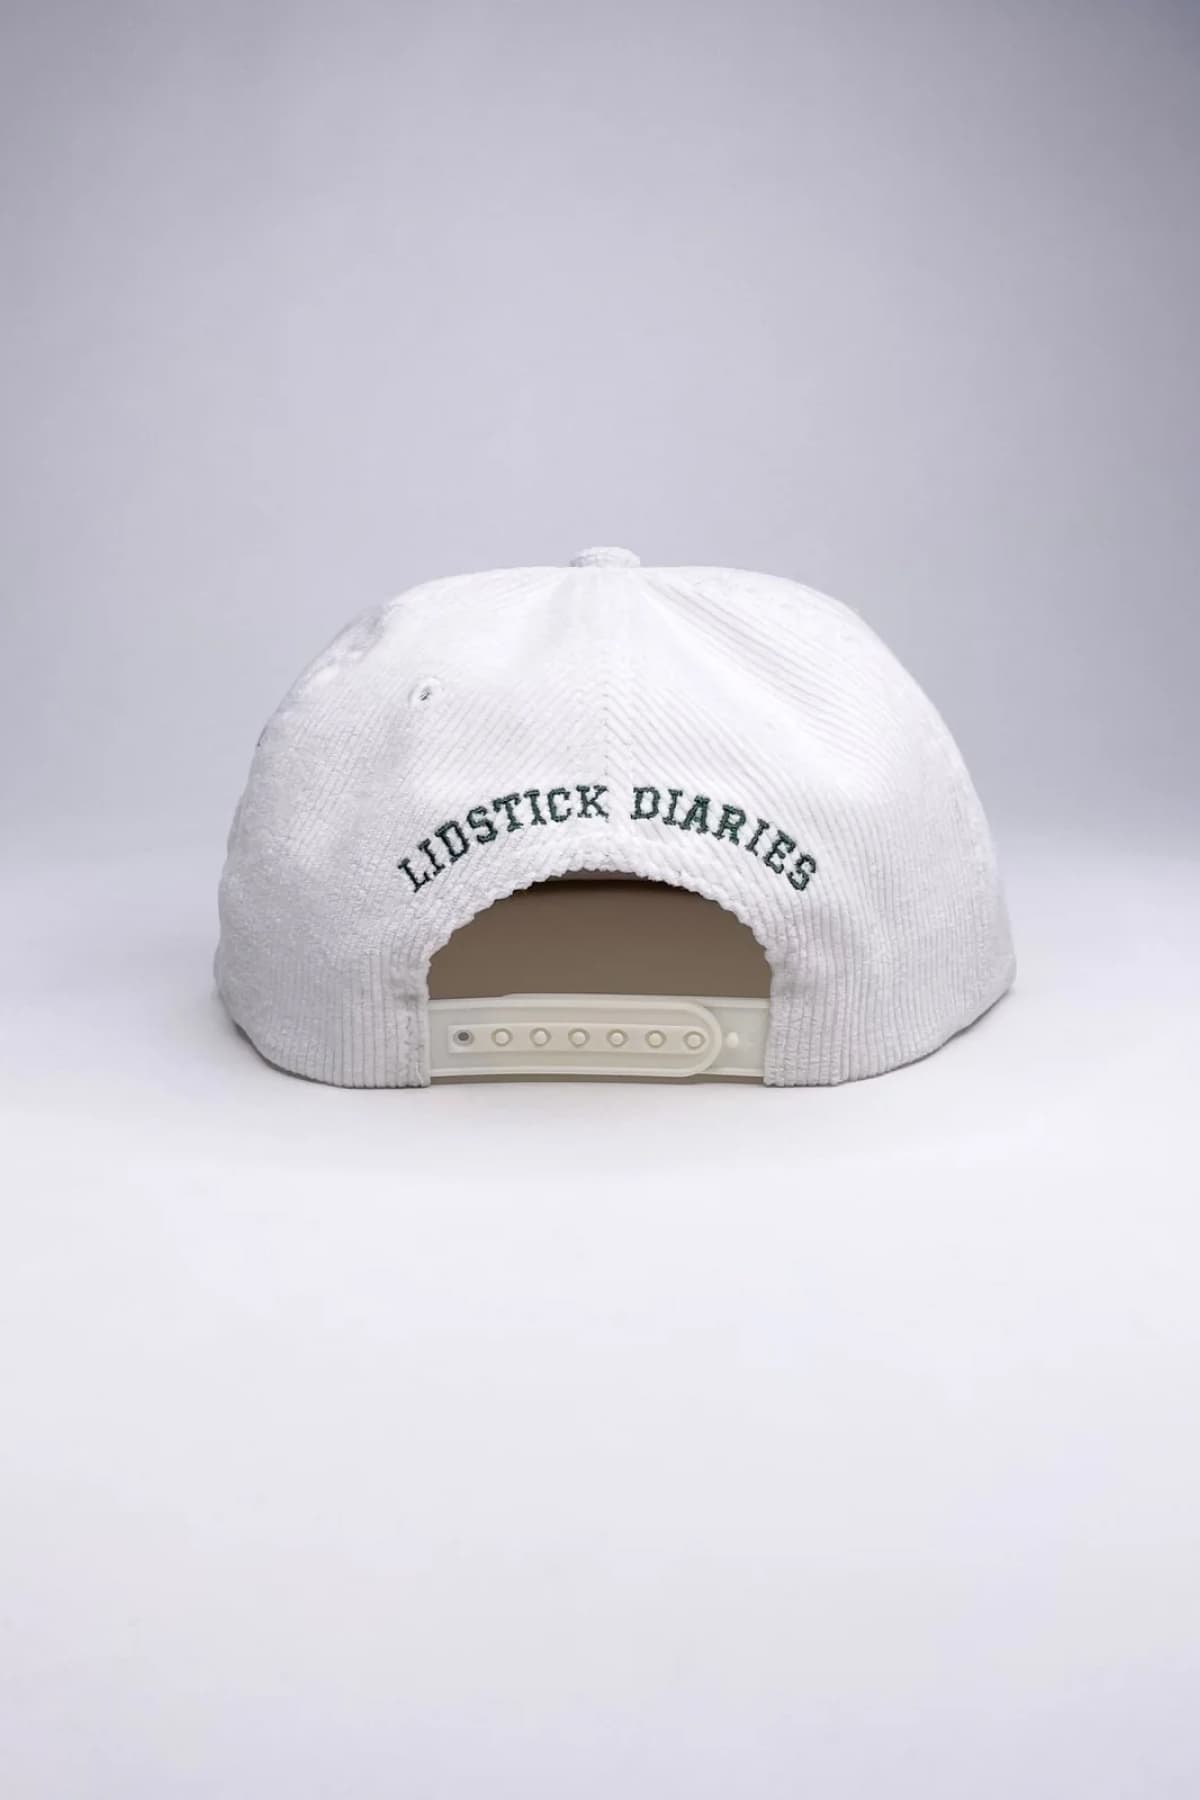 Venice Corduroy Hat (White) - Hat